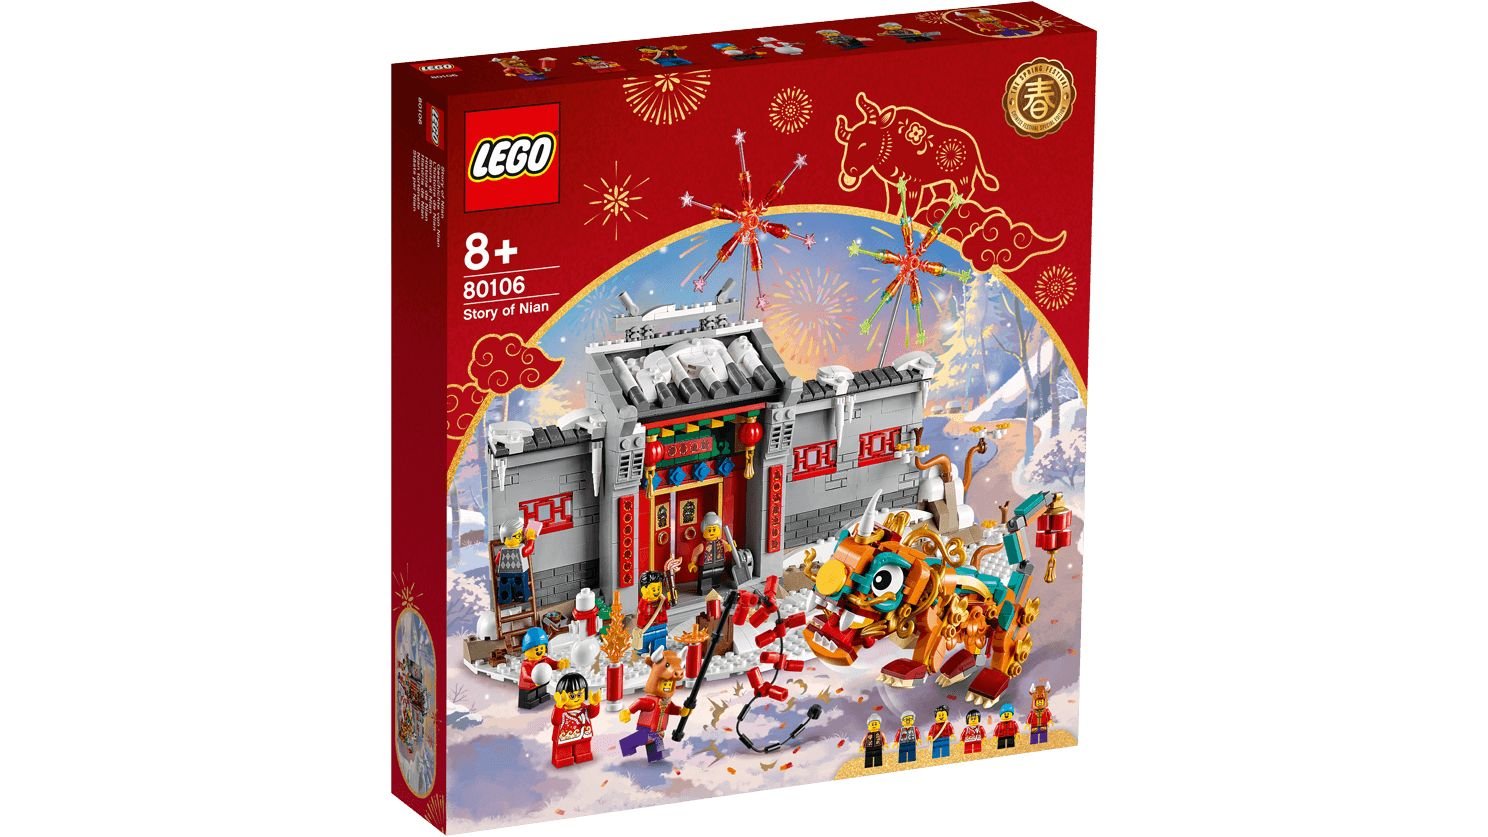 LEGO Seasonal 80106 Geschichte von Nian LEGO_80106_Box1_v29_1488.jpg